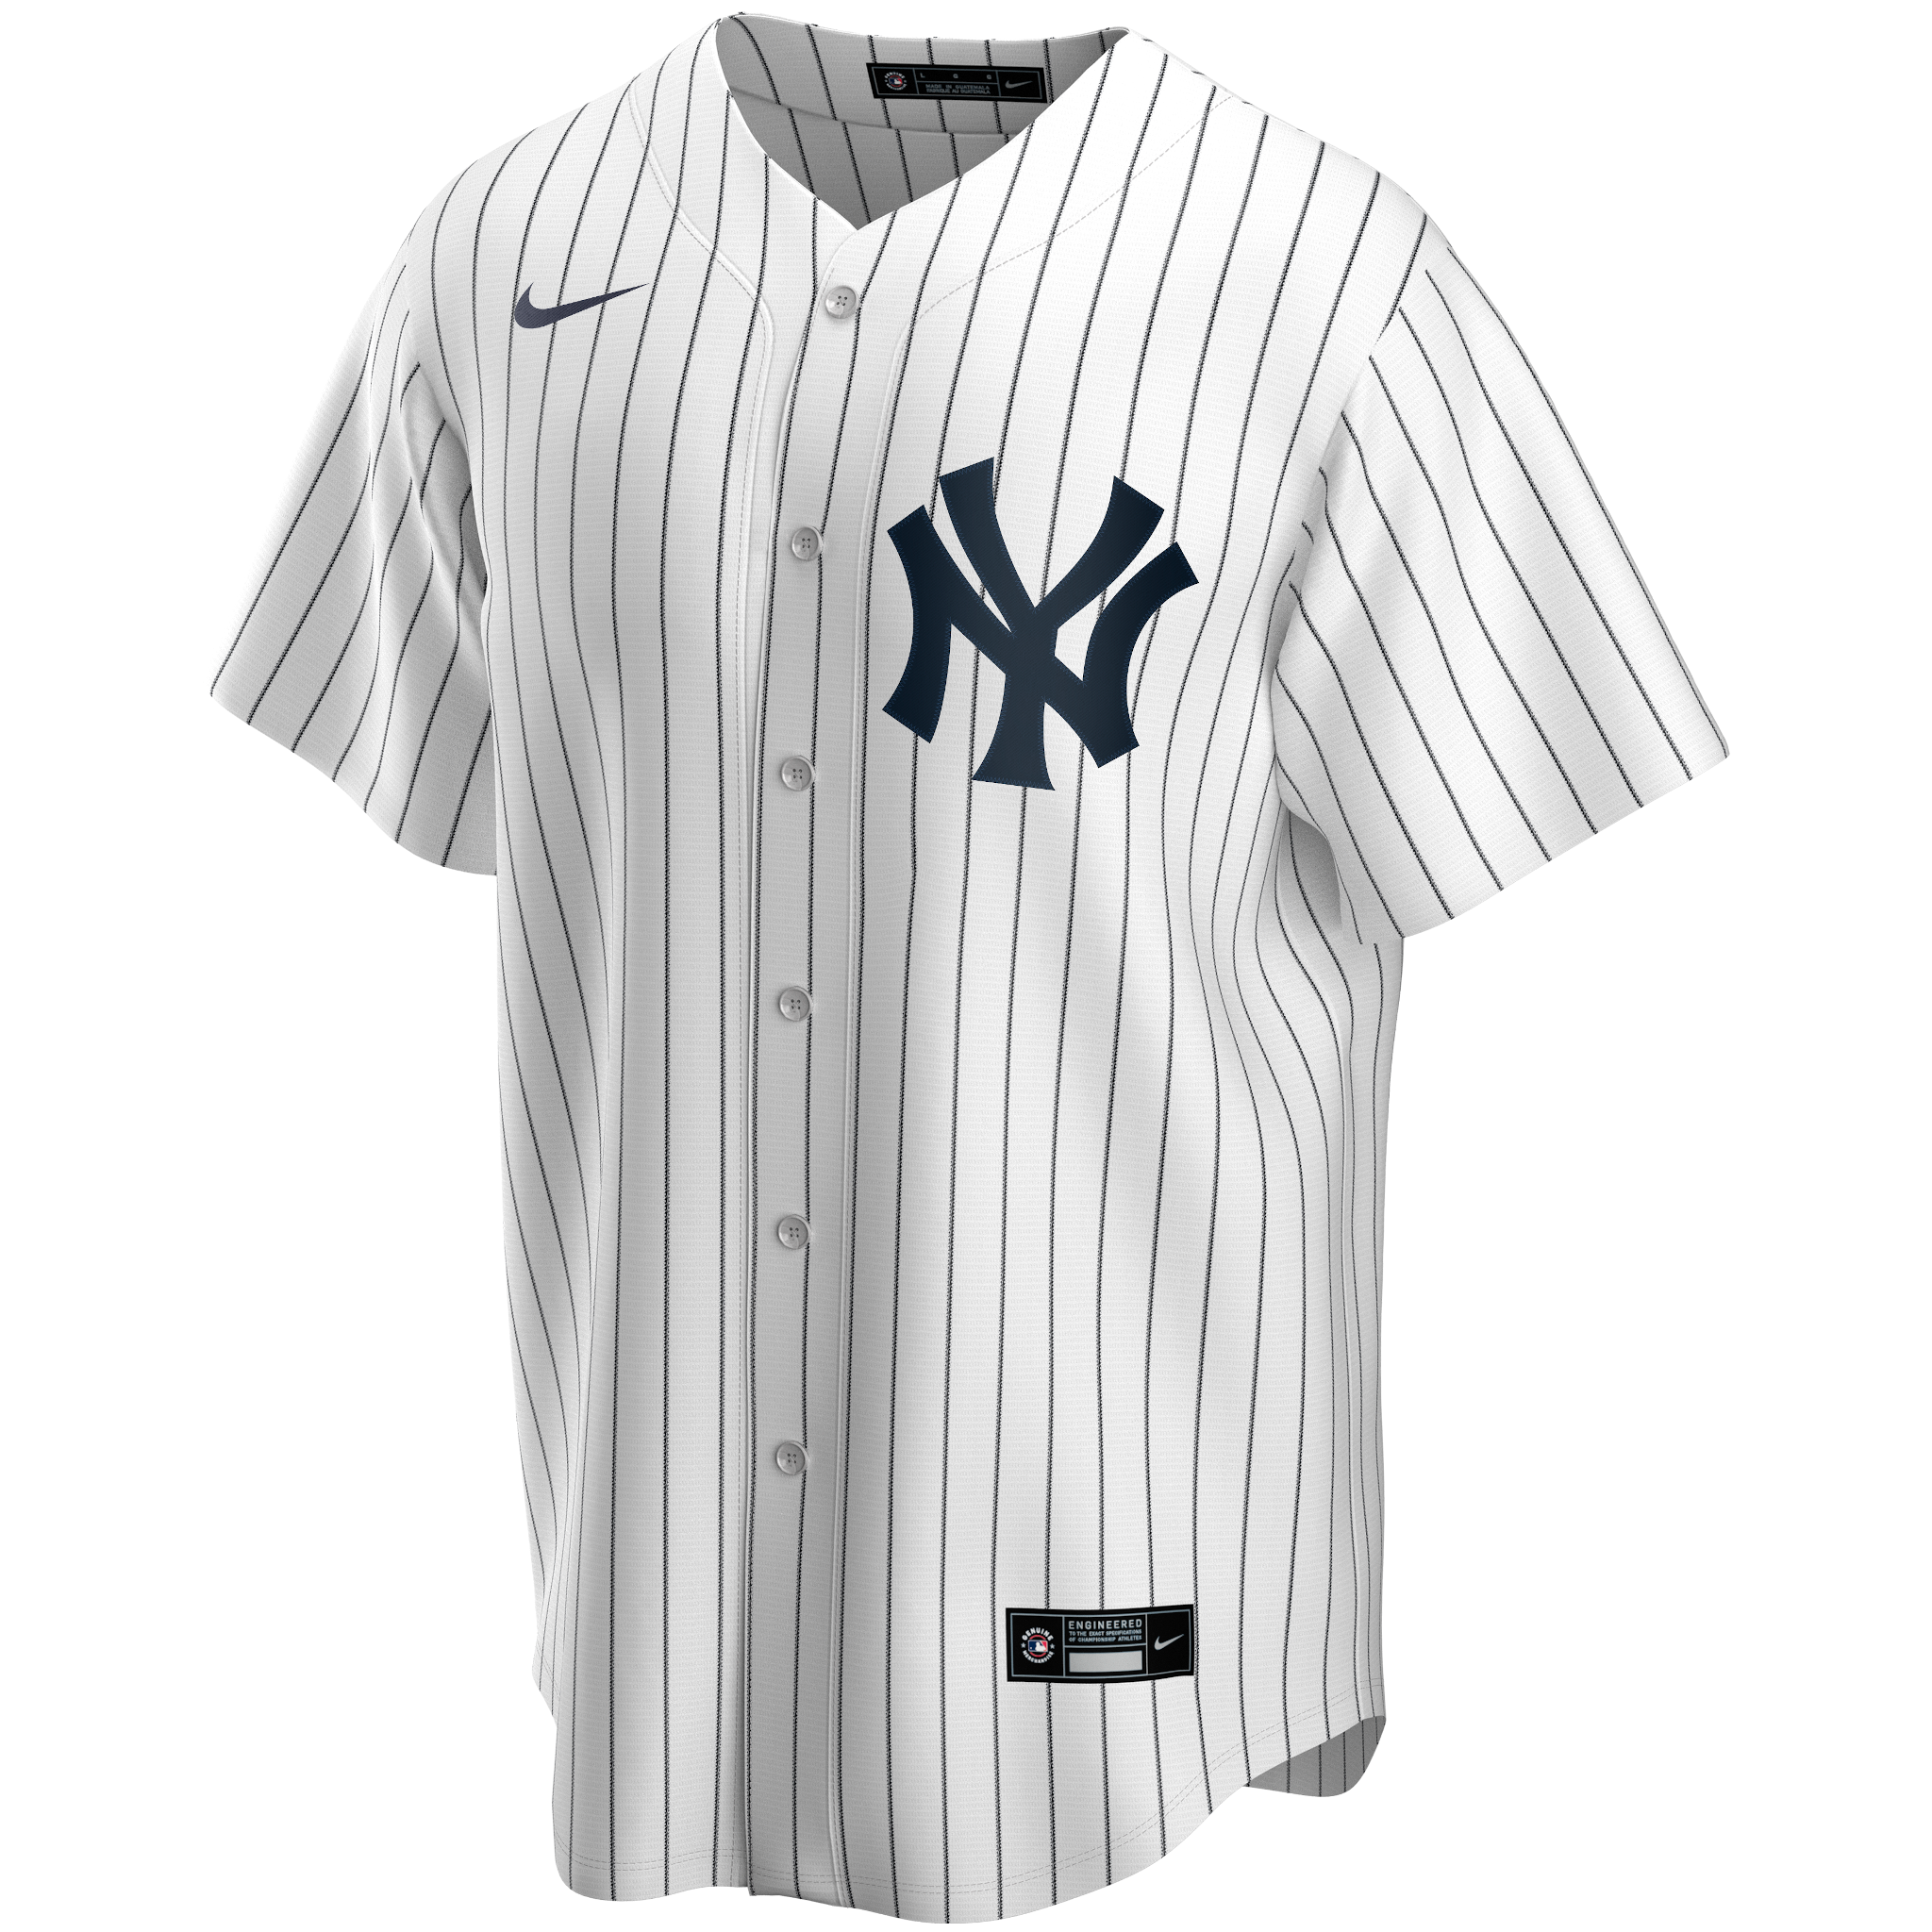 Thurman Munson Men's New York Yankees Road Jersey - Gray Authentic